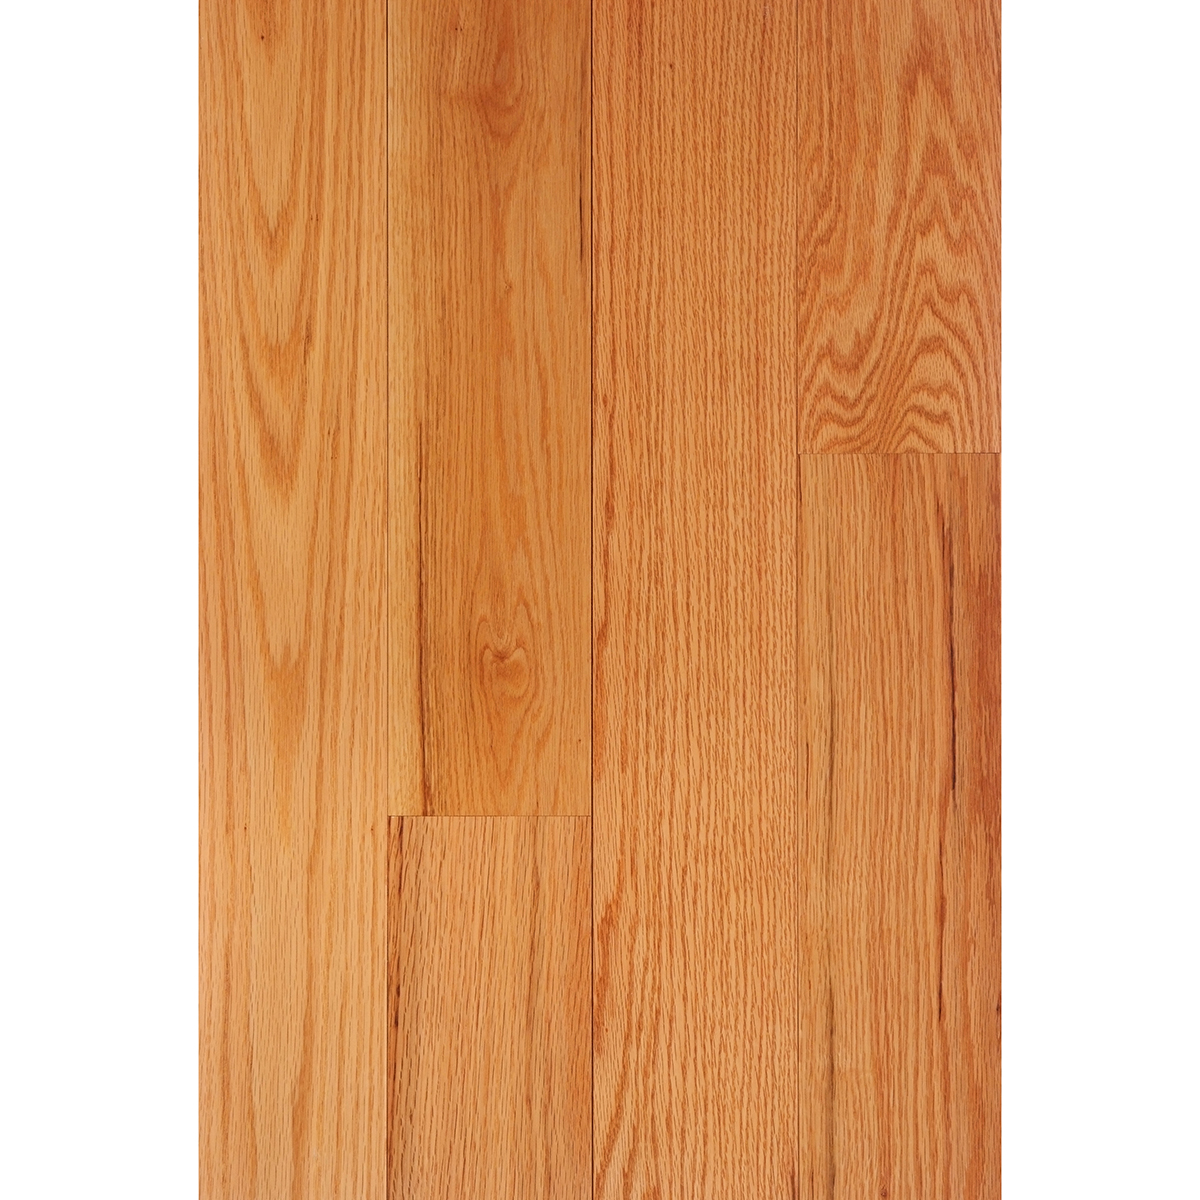 Red Oak Select Grade Flooring, 5 16 Vs 3 4 Hardwood Flooring